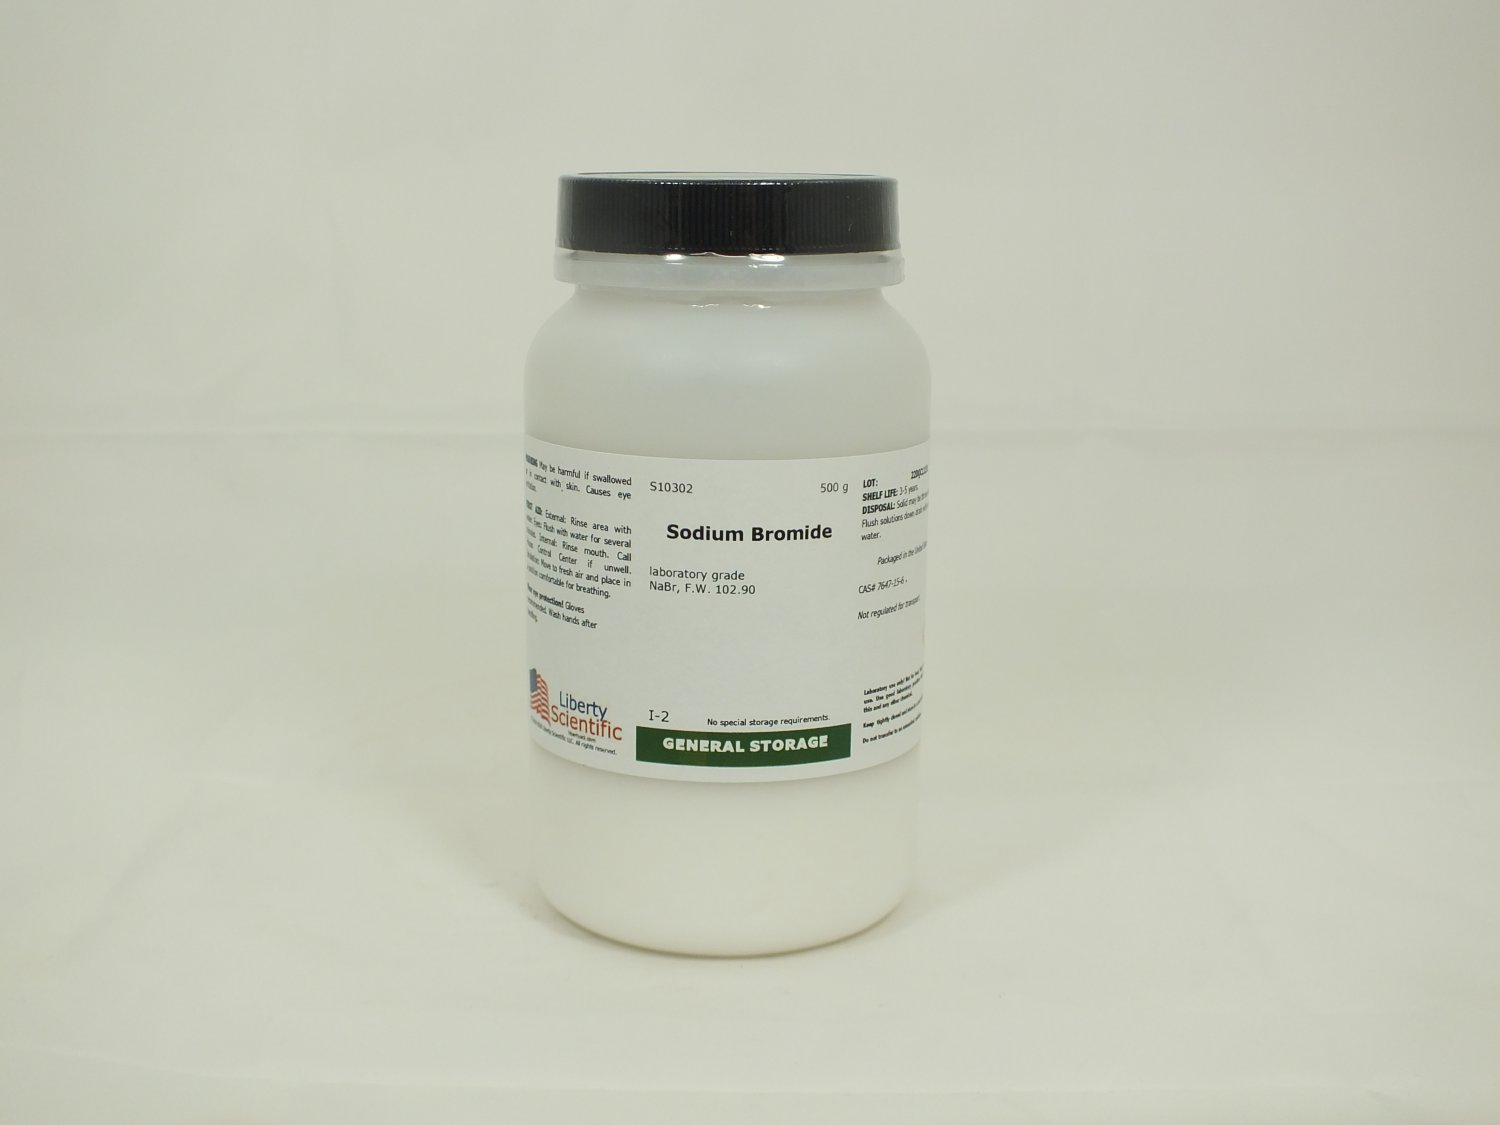 Sodium Bromide, laboratory grade, 500 g